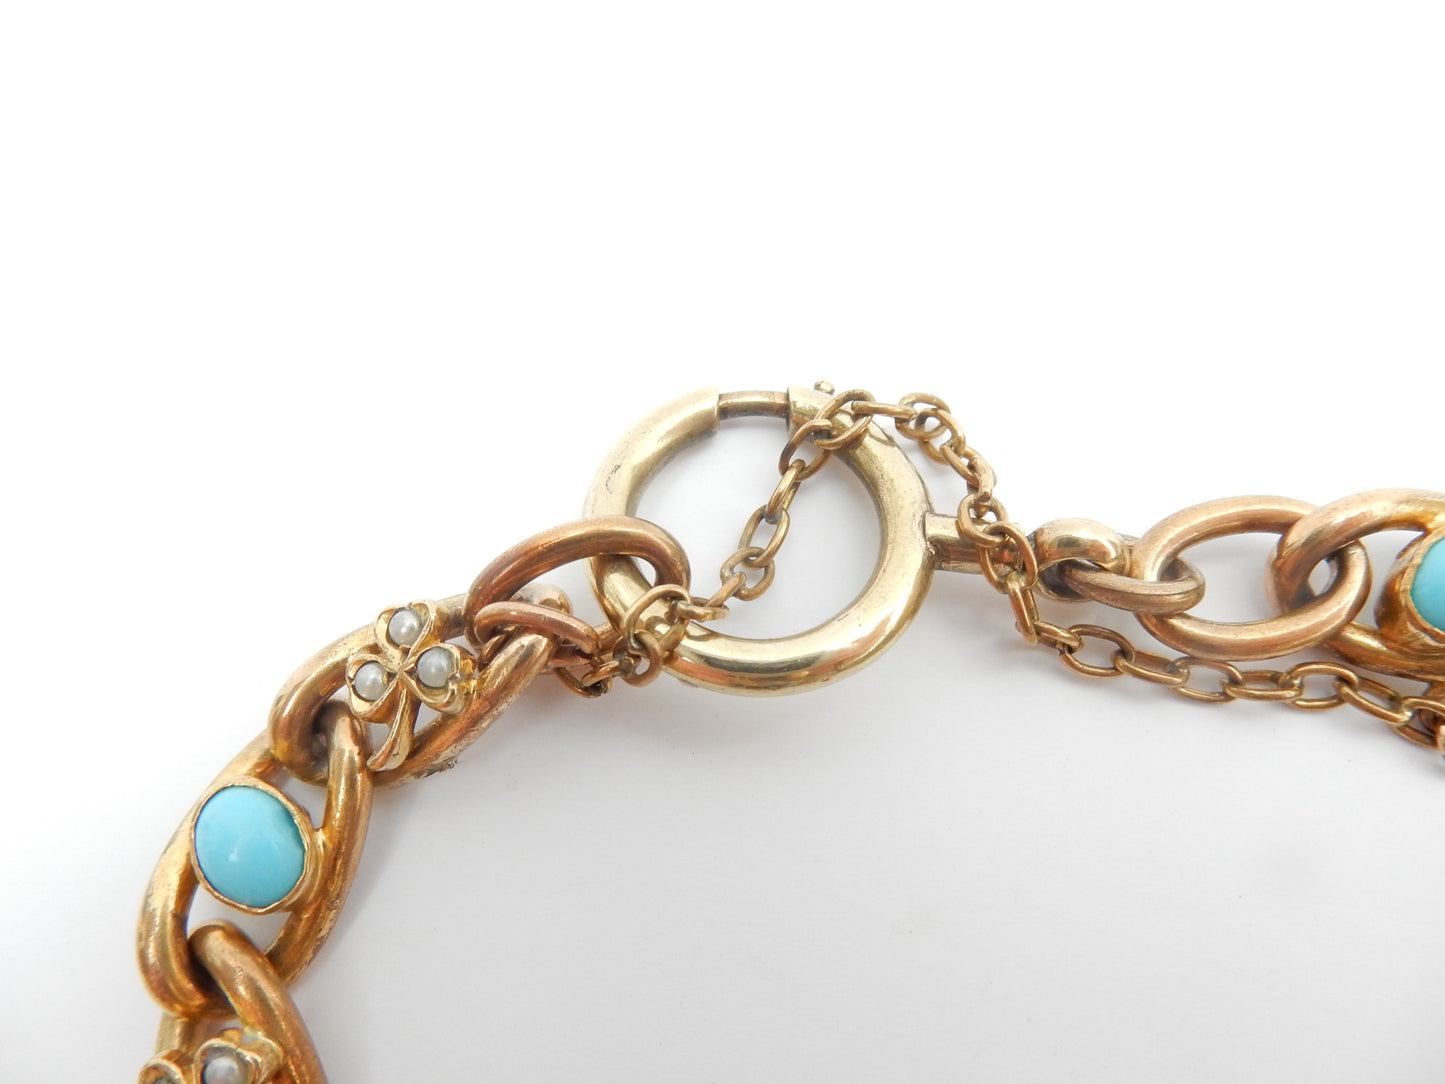 Antique Rolled Gold Turquoise & Seed Pearl Clover Leaf Bracelet